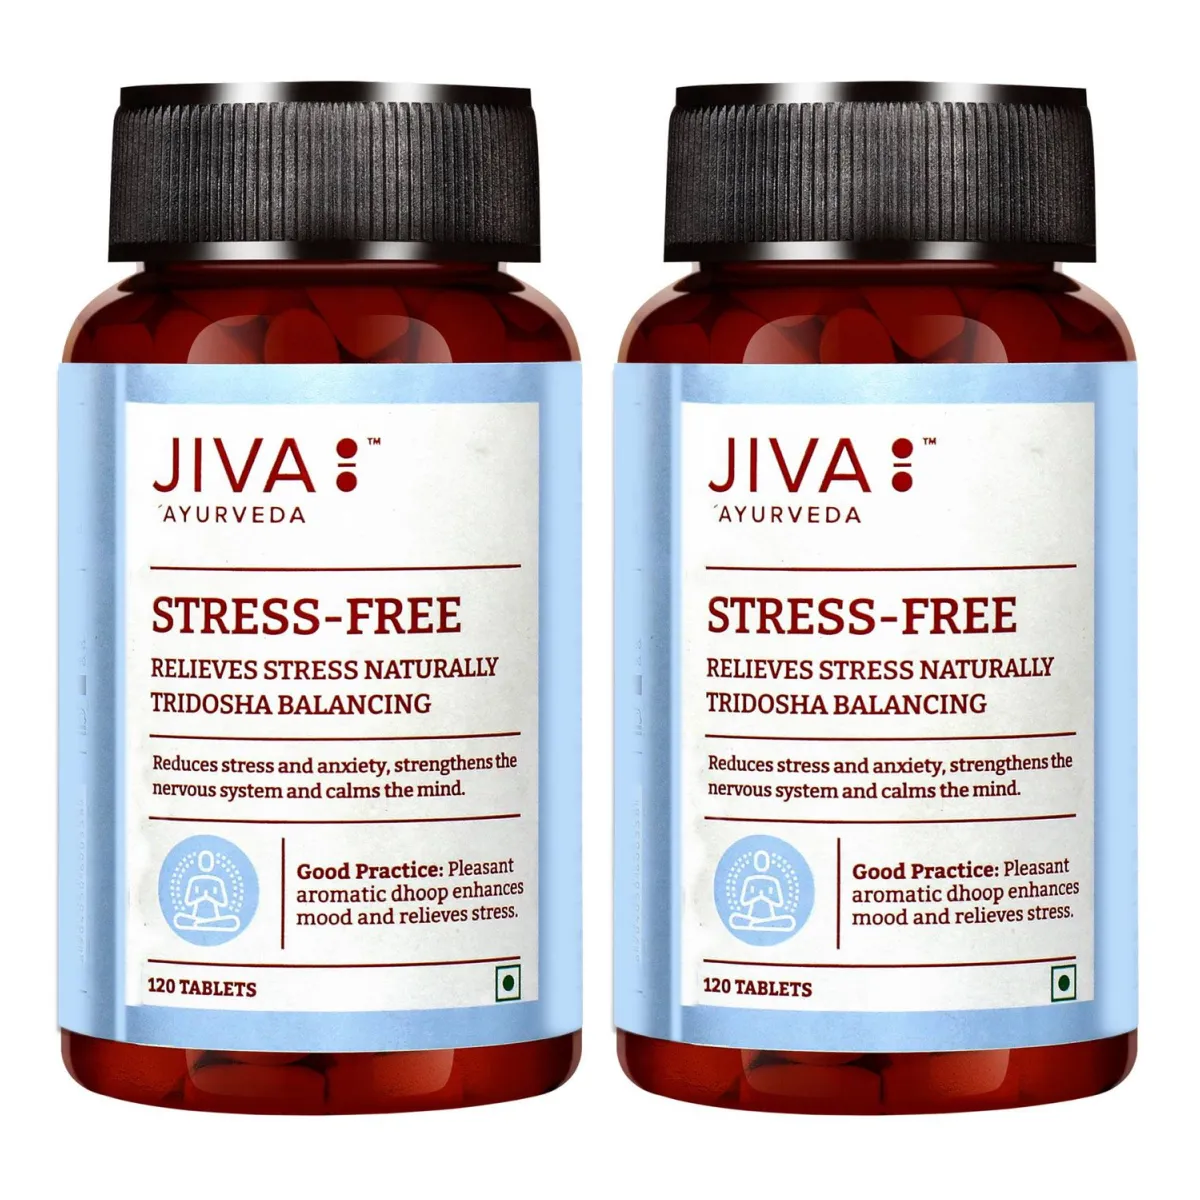 Jiva Ayurveda Stress Free Tablets 120tab, Pack of 2